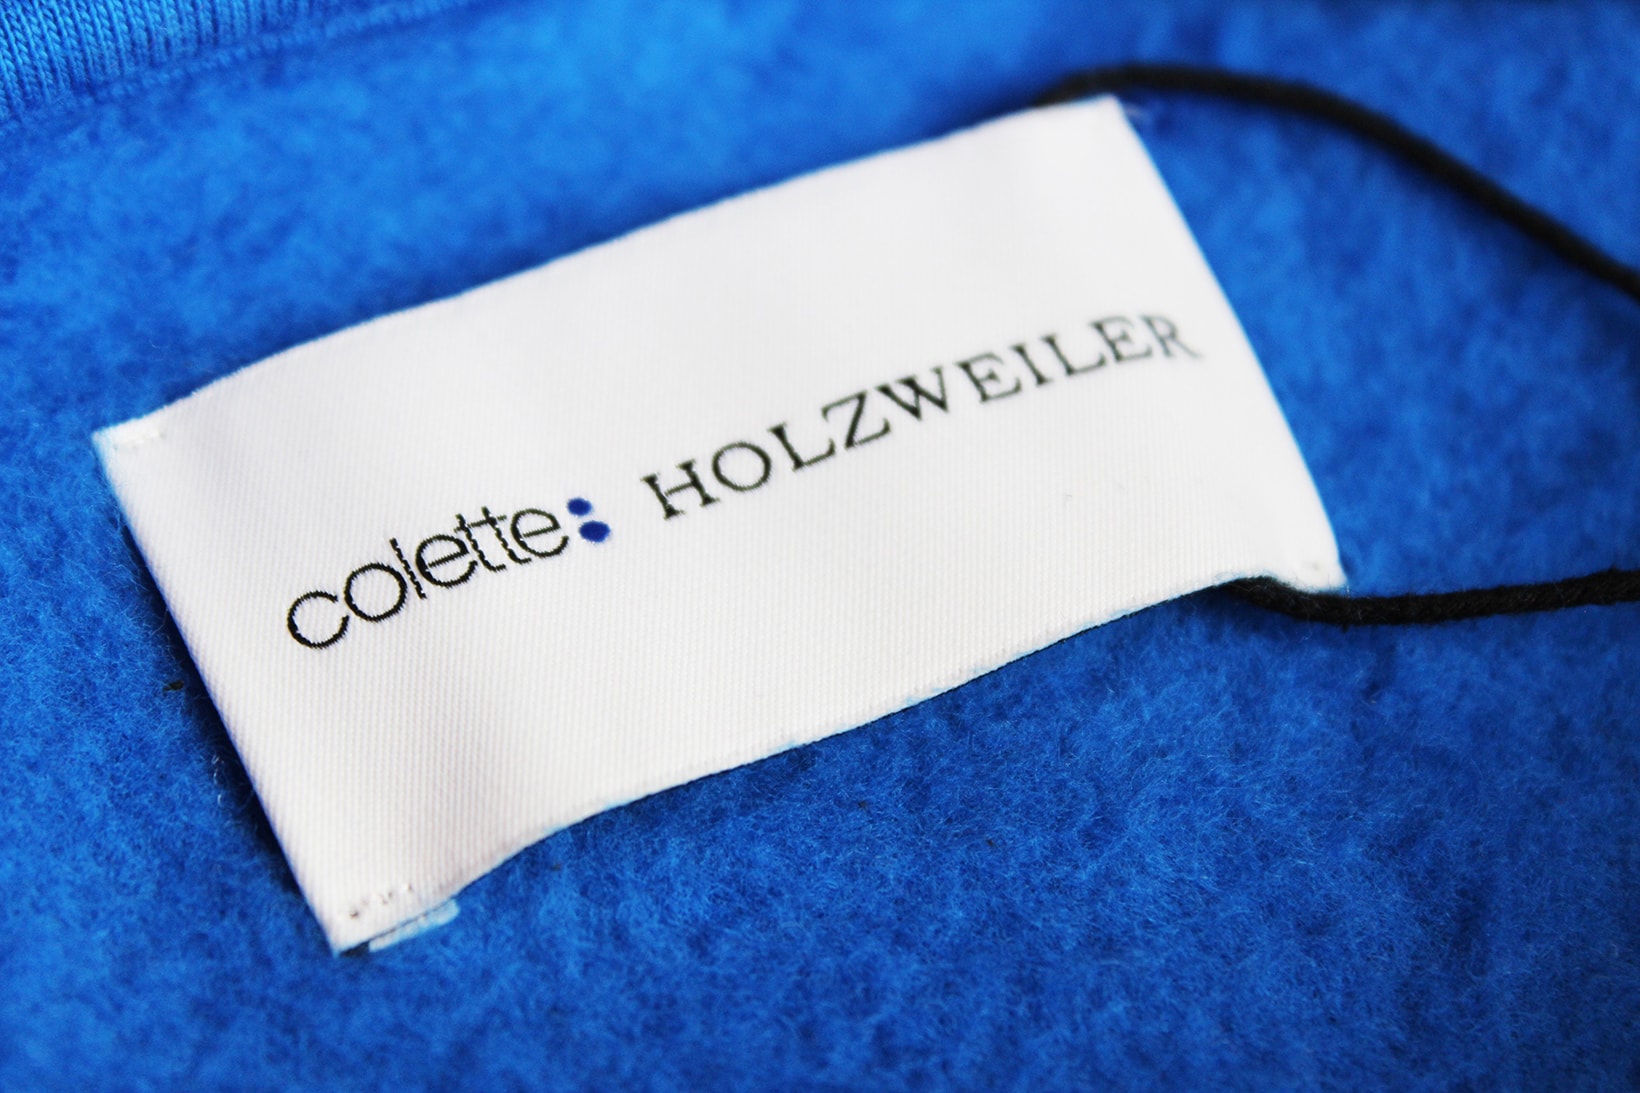 colette #coletteforever Holzweiler Hangon Hoodie Blue